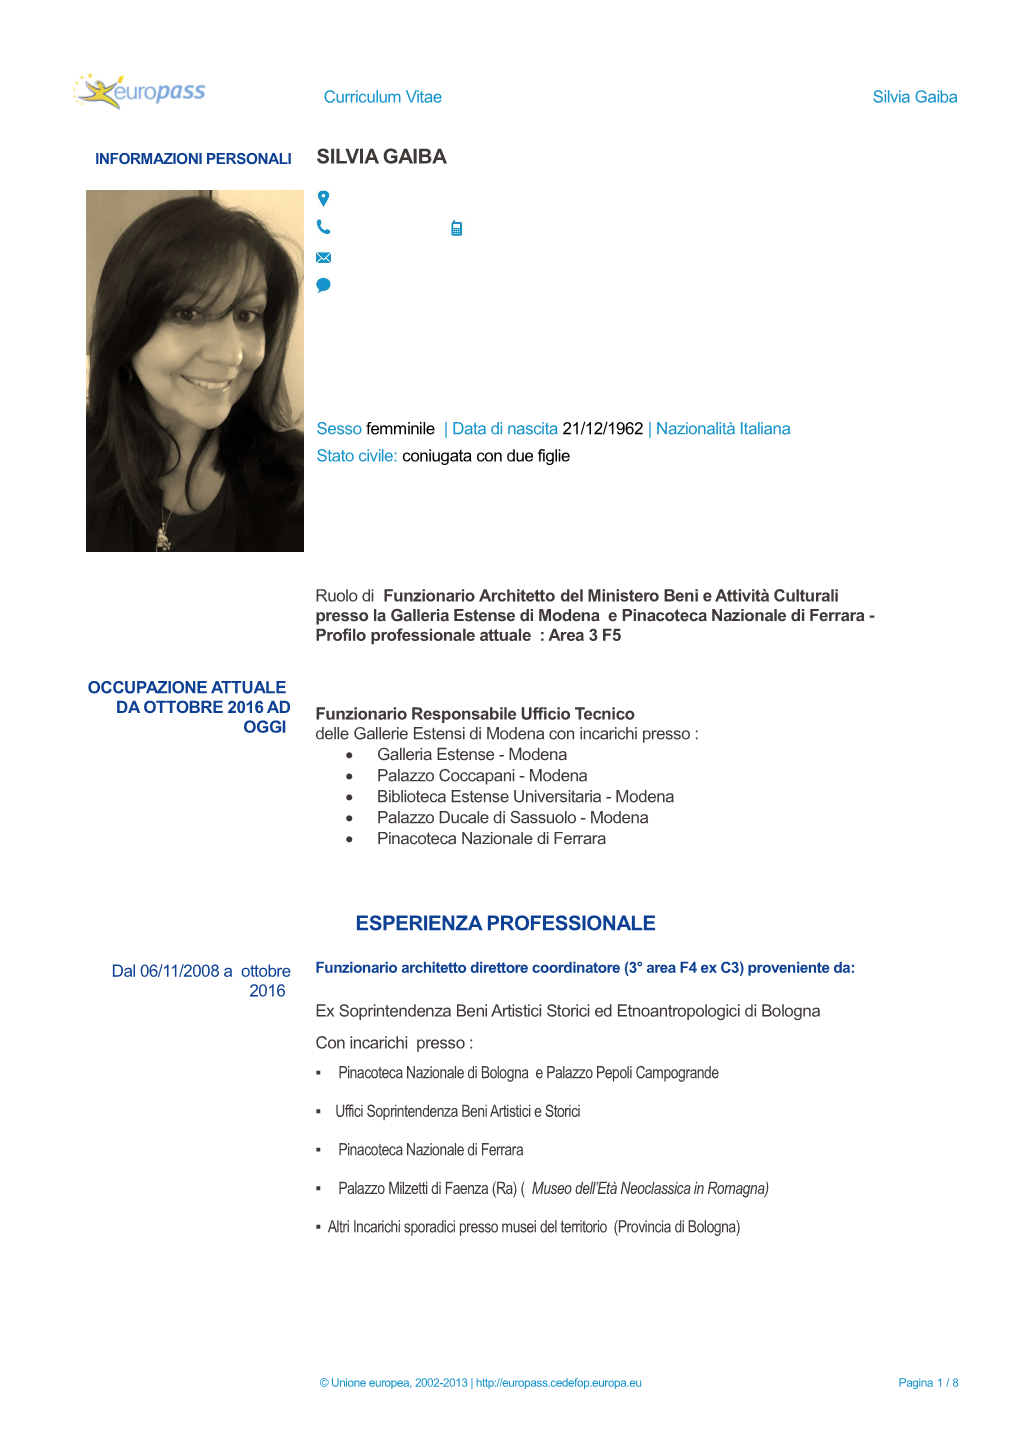 Curriculum Vitae Silvia Gaiba 2019